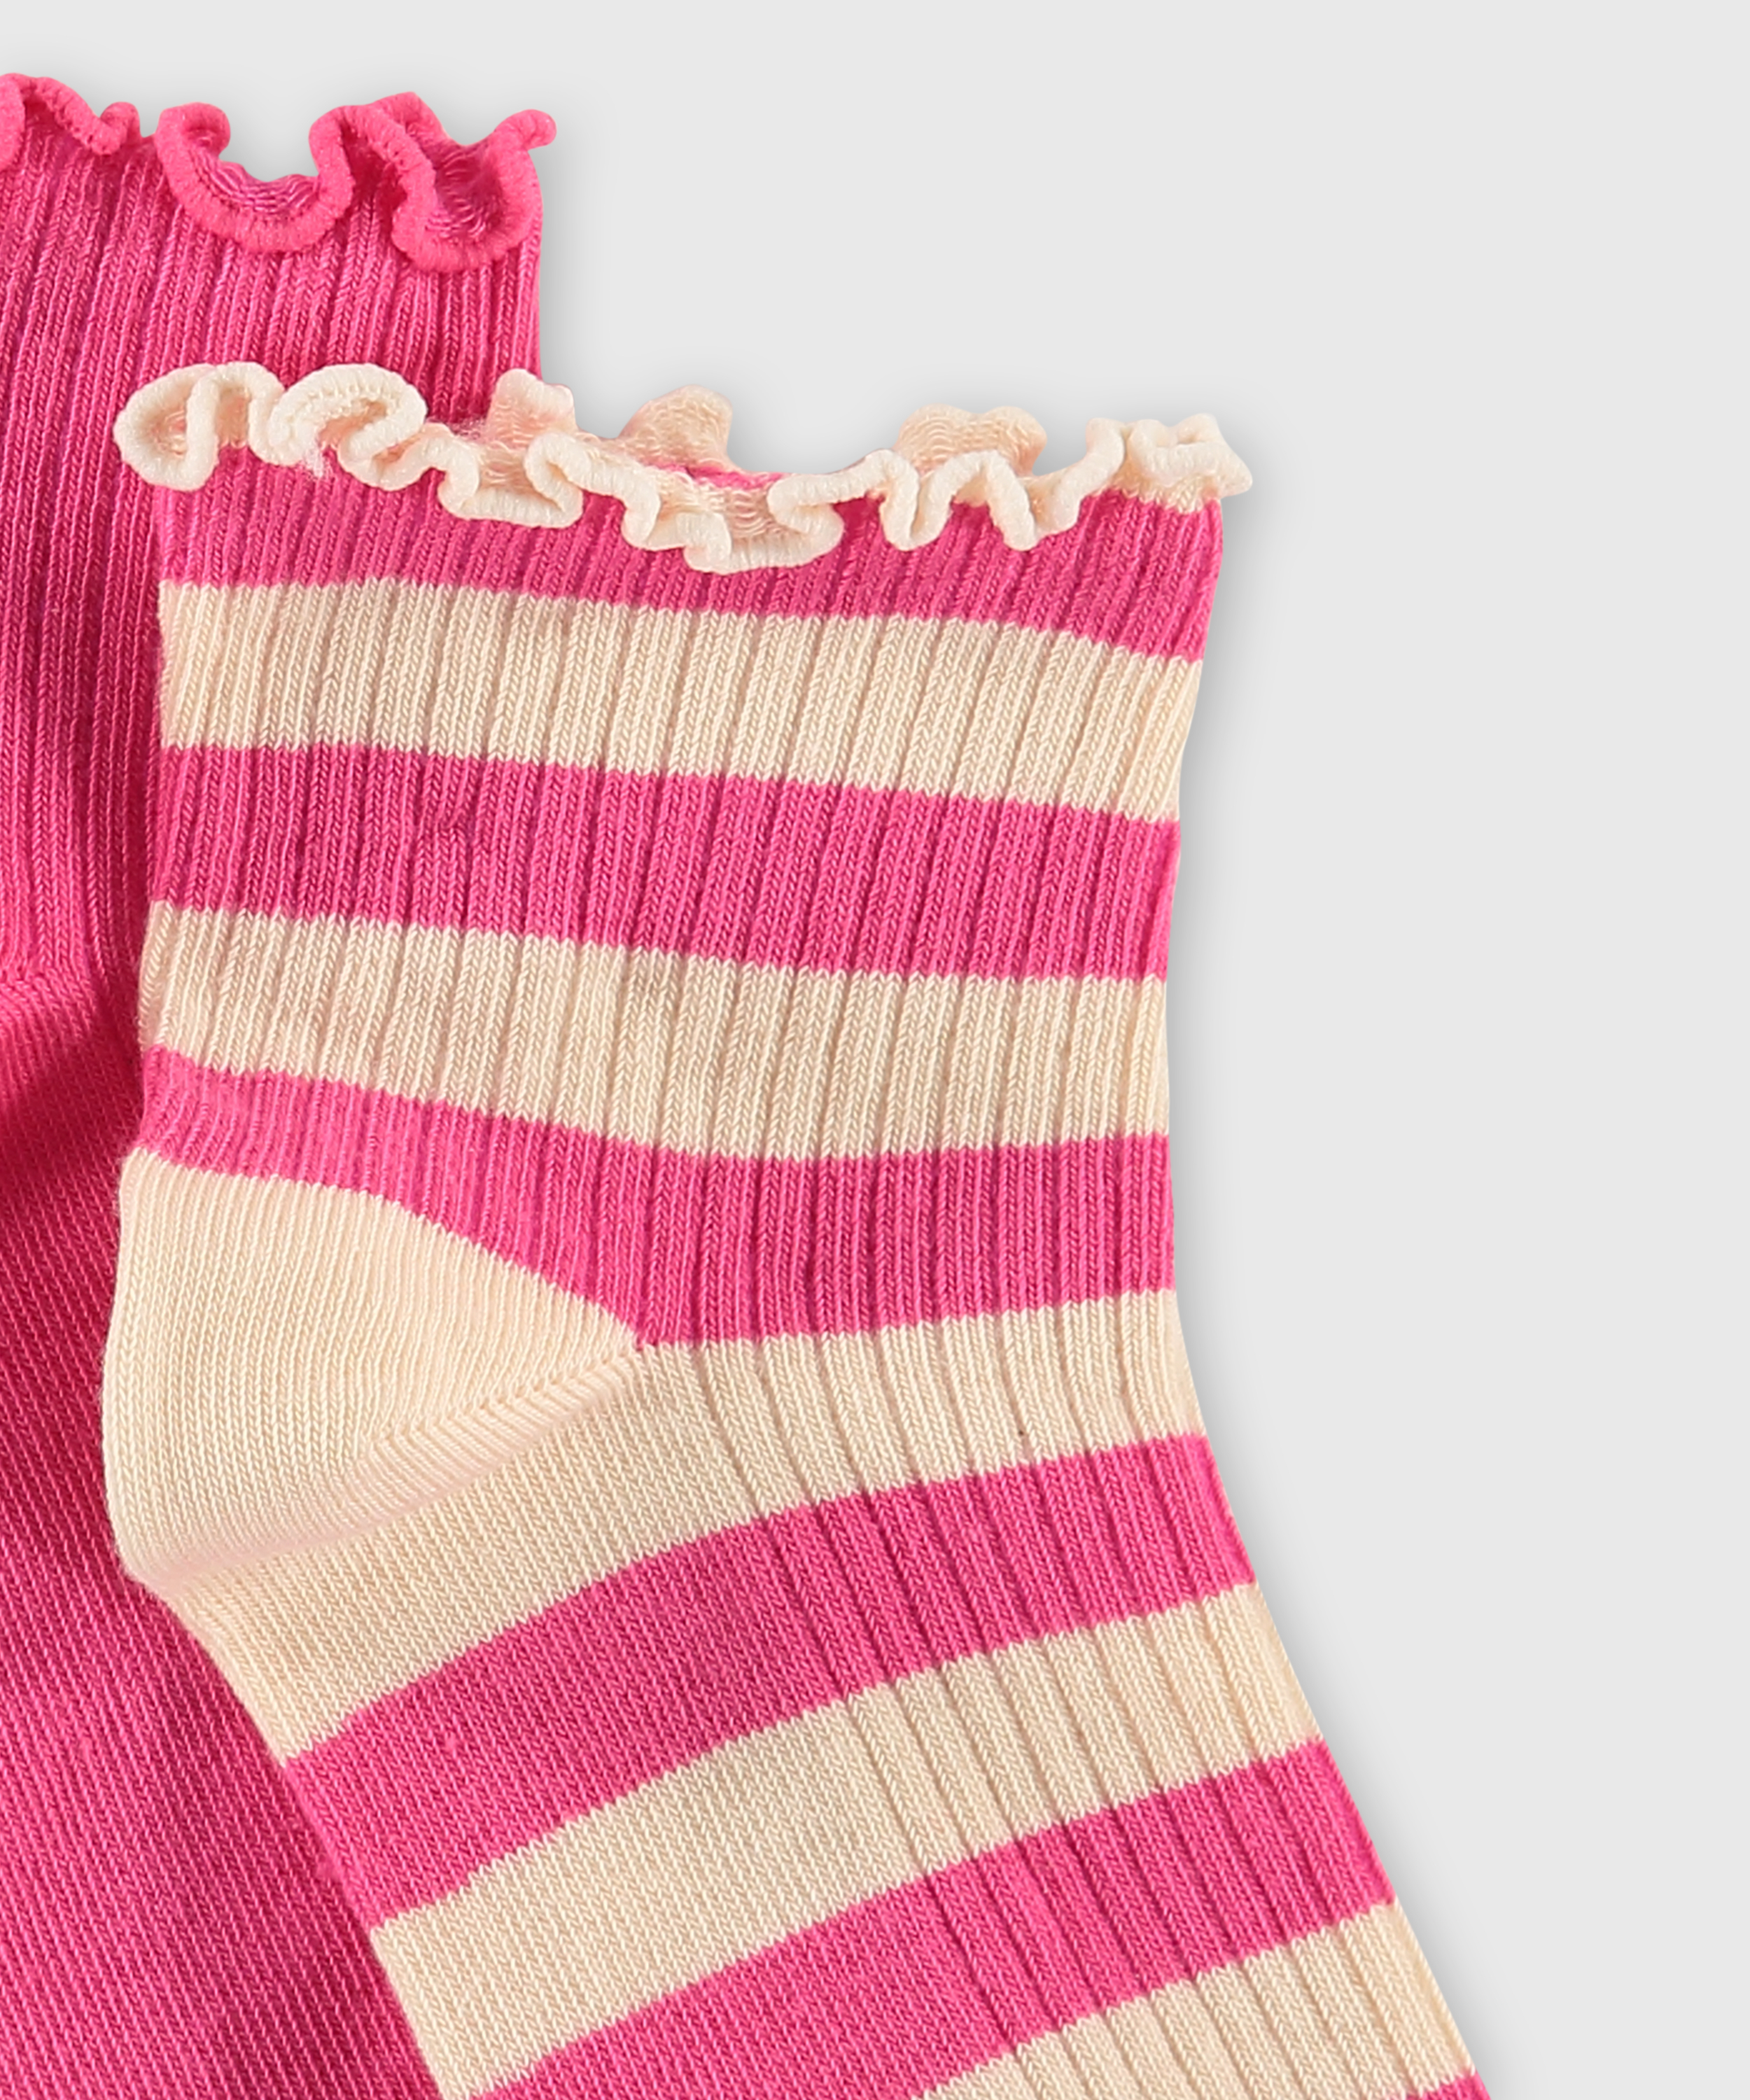 2 pairs of socks, Pink, main